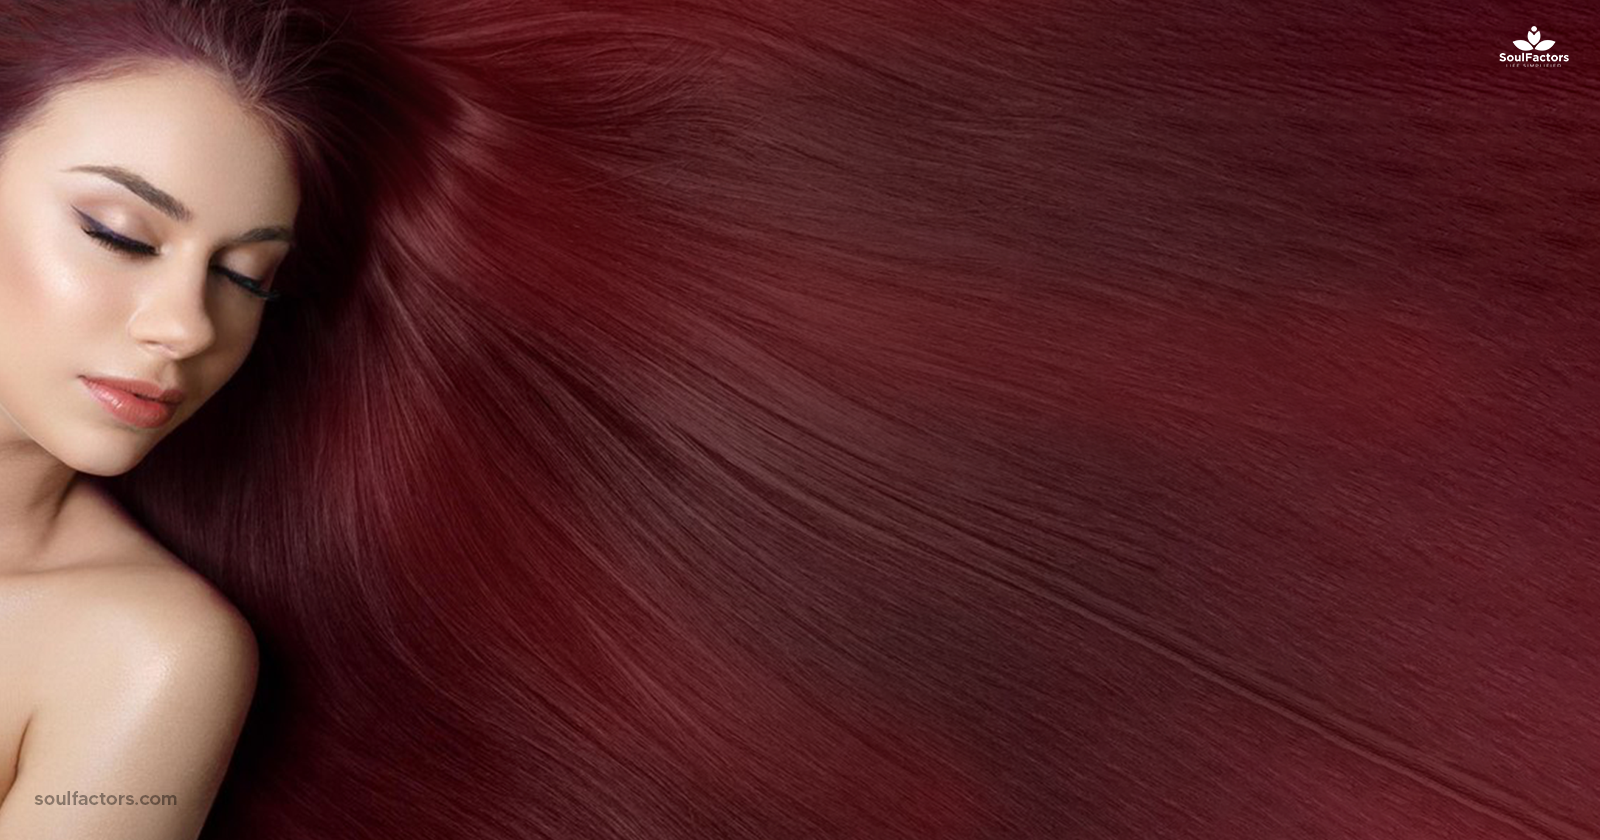 Best Cherry Cola Hair Dye: Why Cherry Coke Hair Color